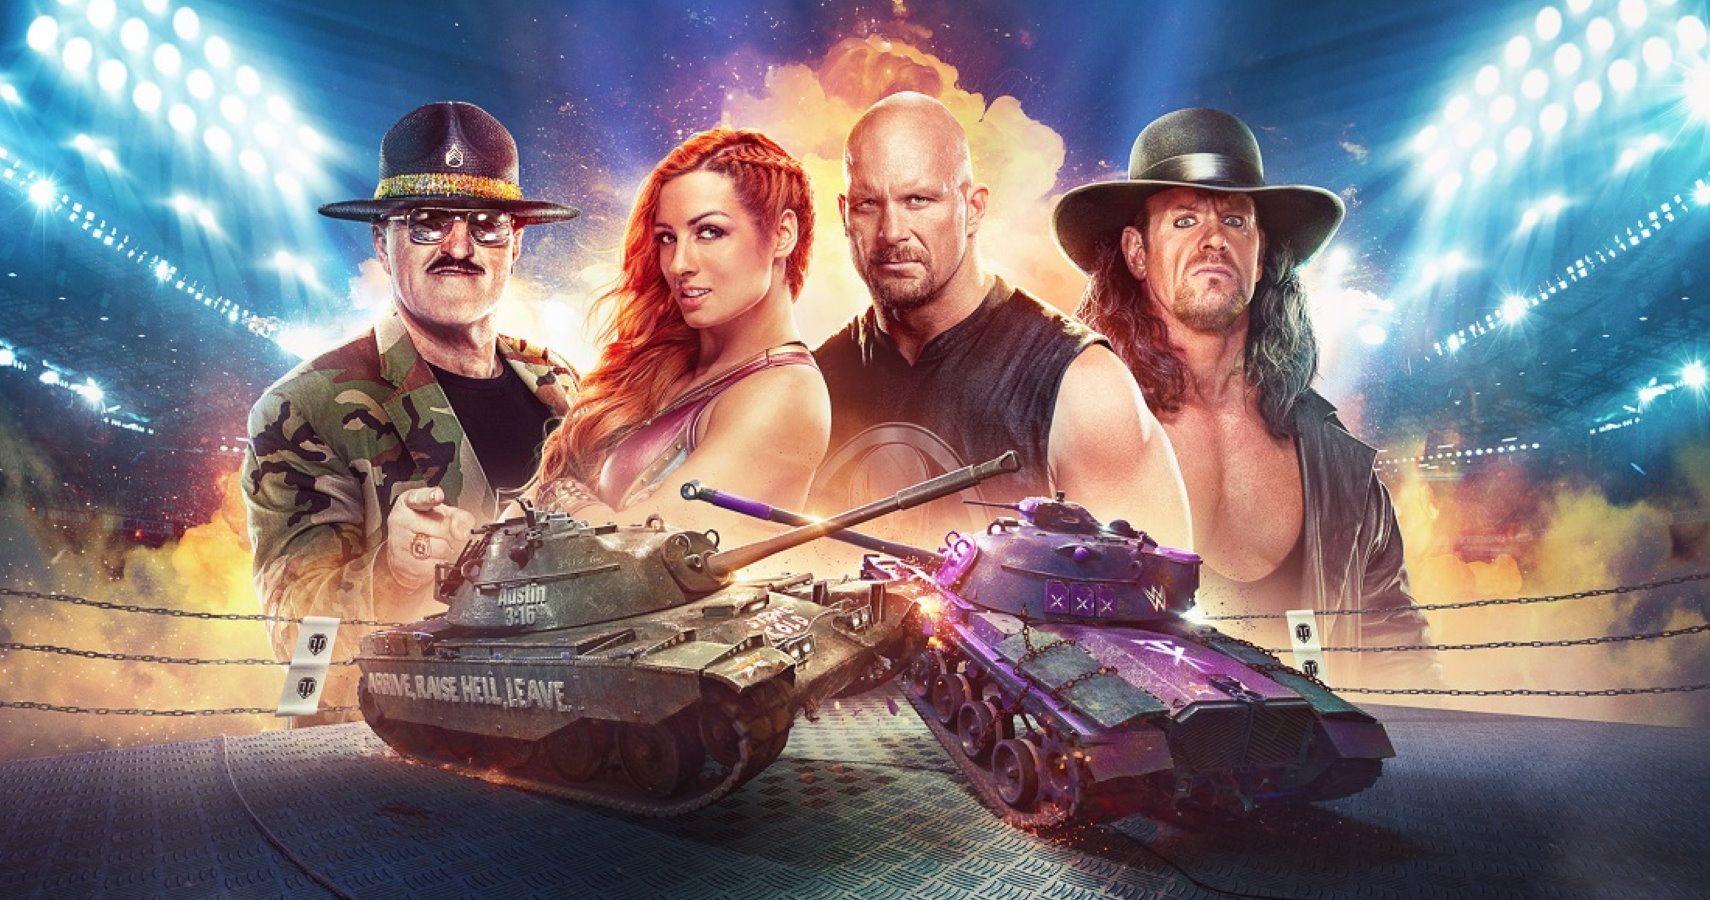 WWE World of Tanks